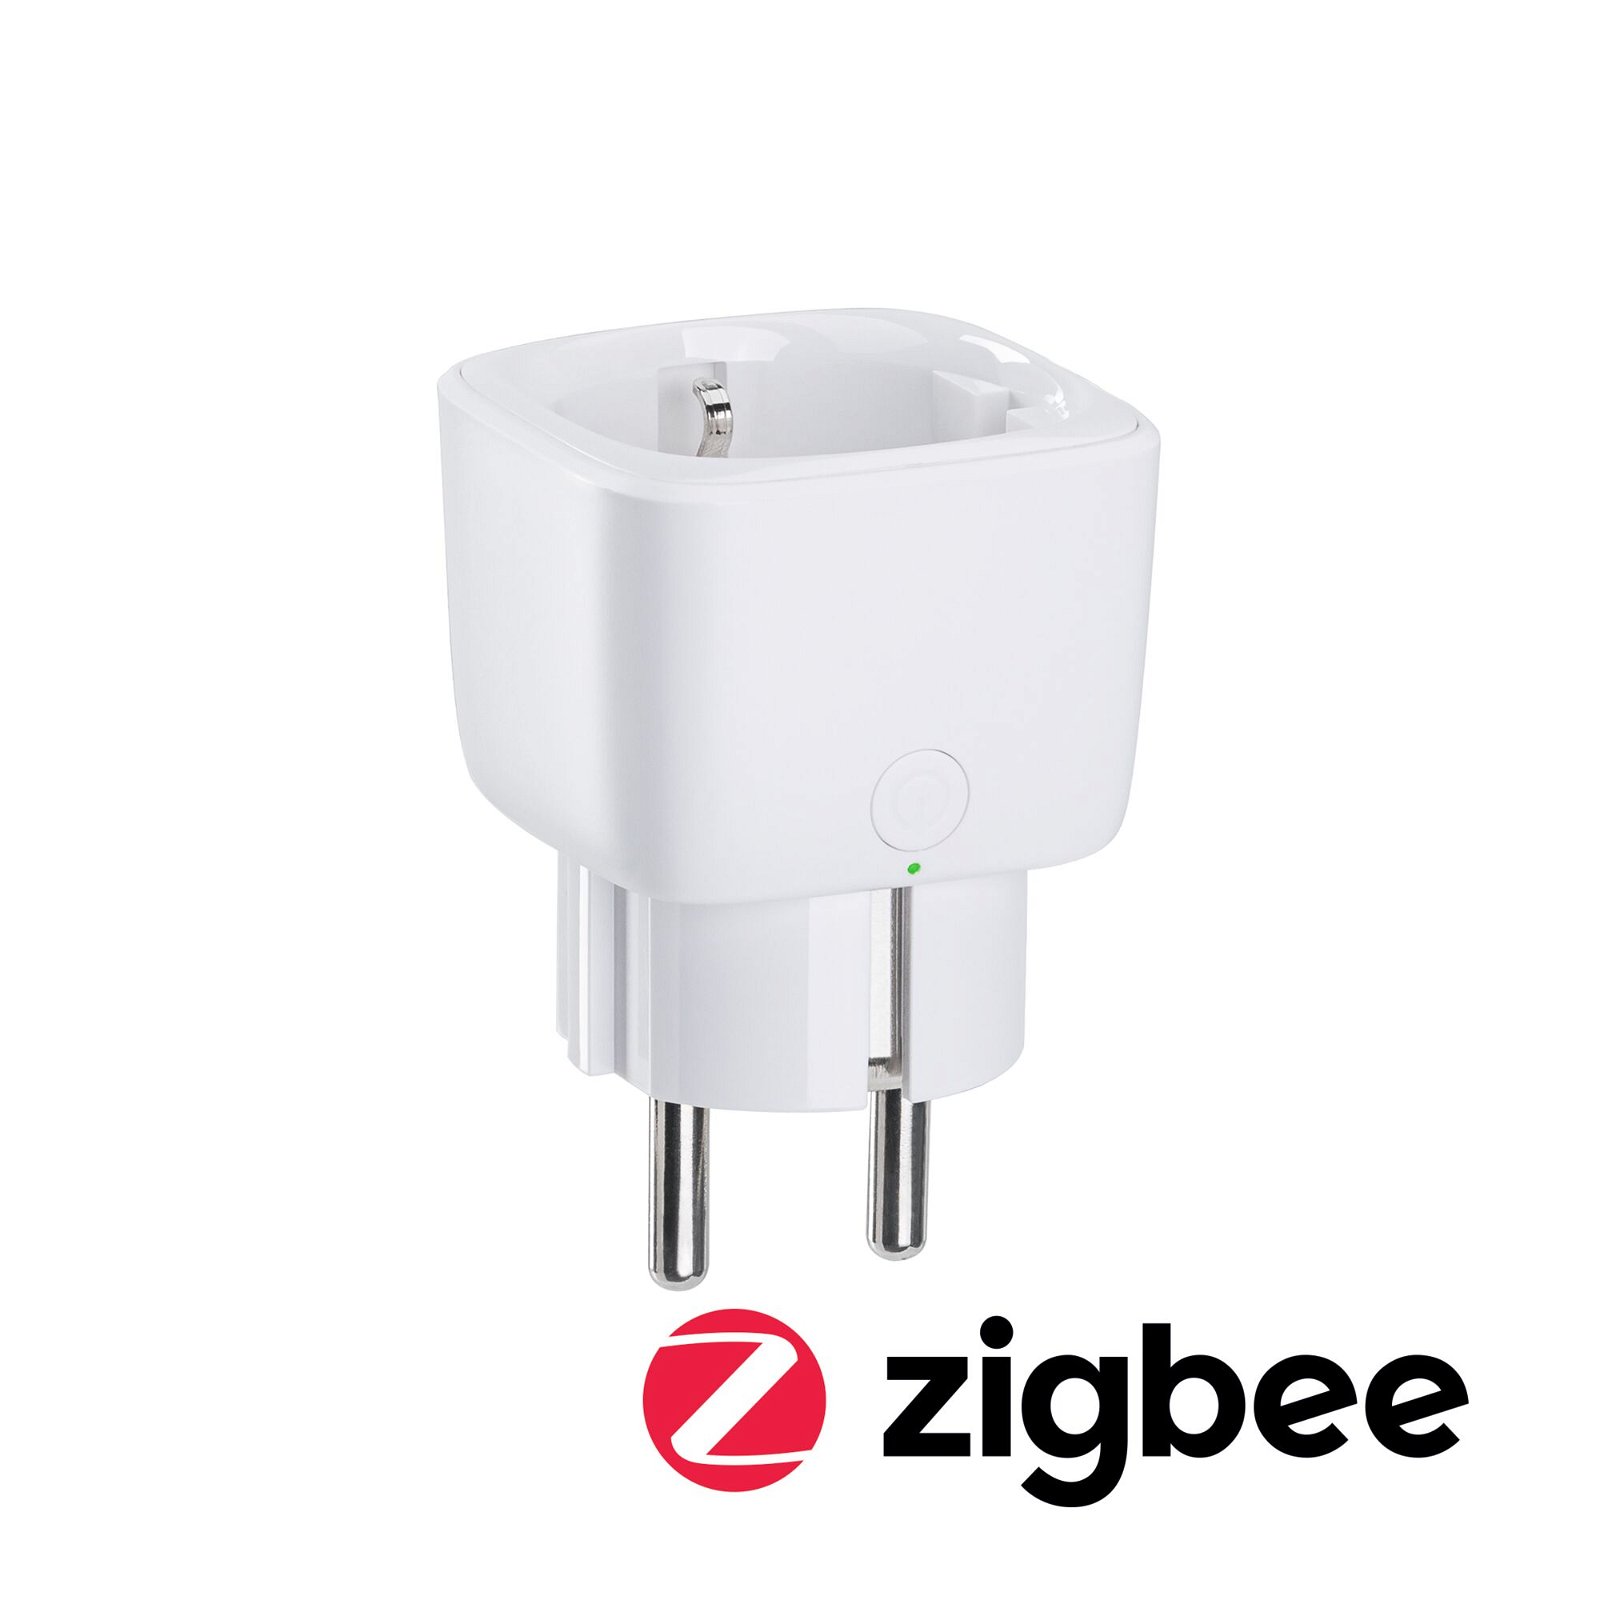 Tussenstekker Smart Home Zigbee Smart Plug Wit